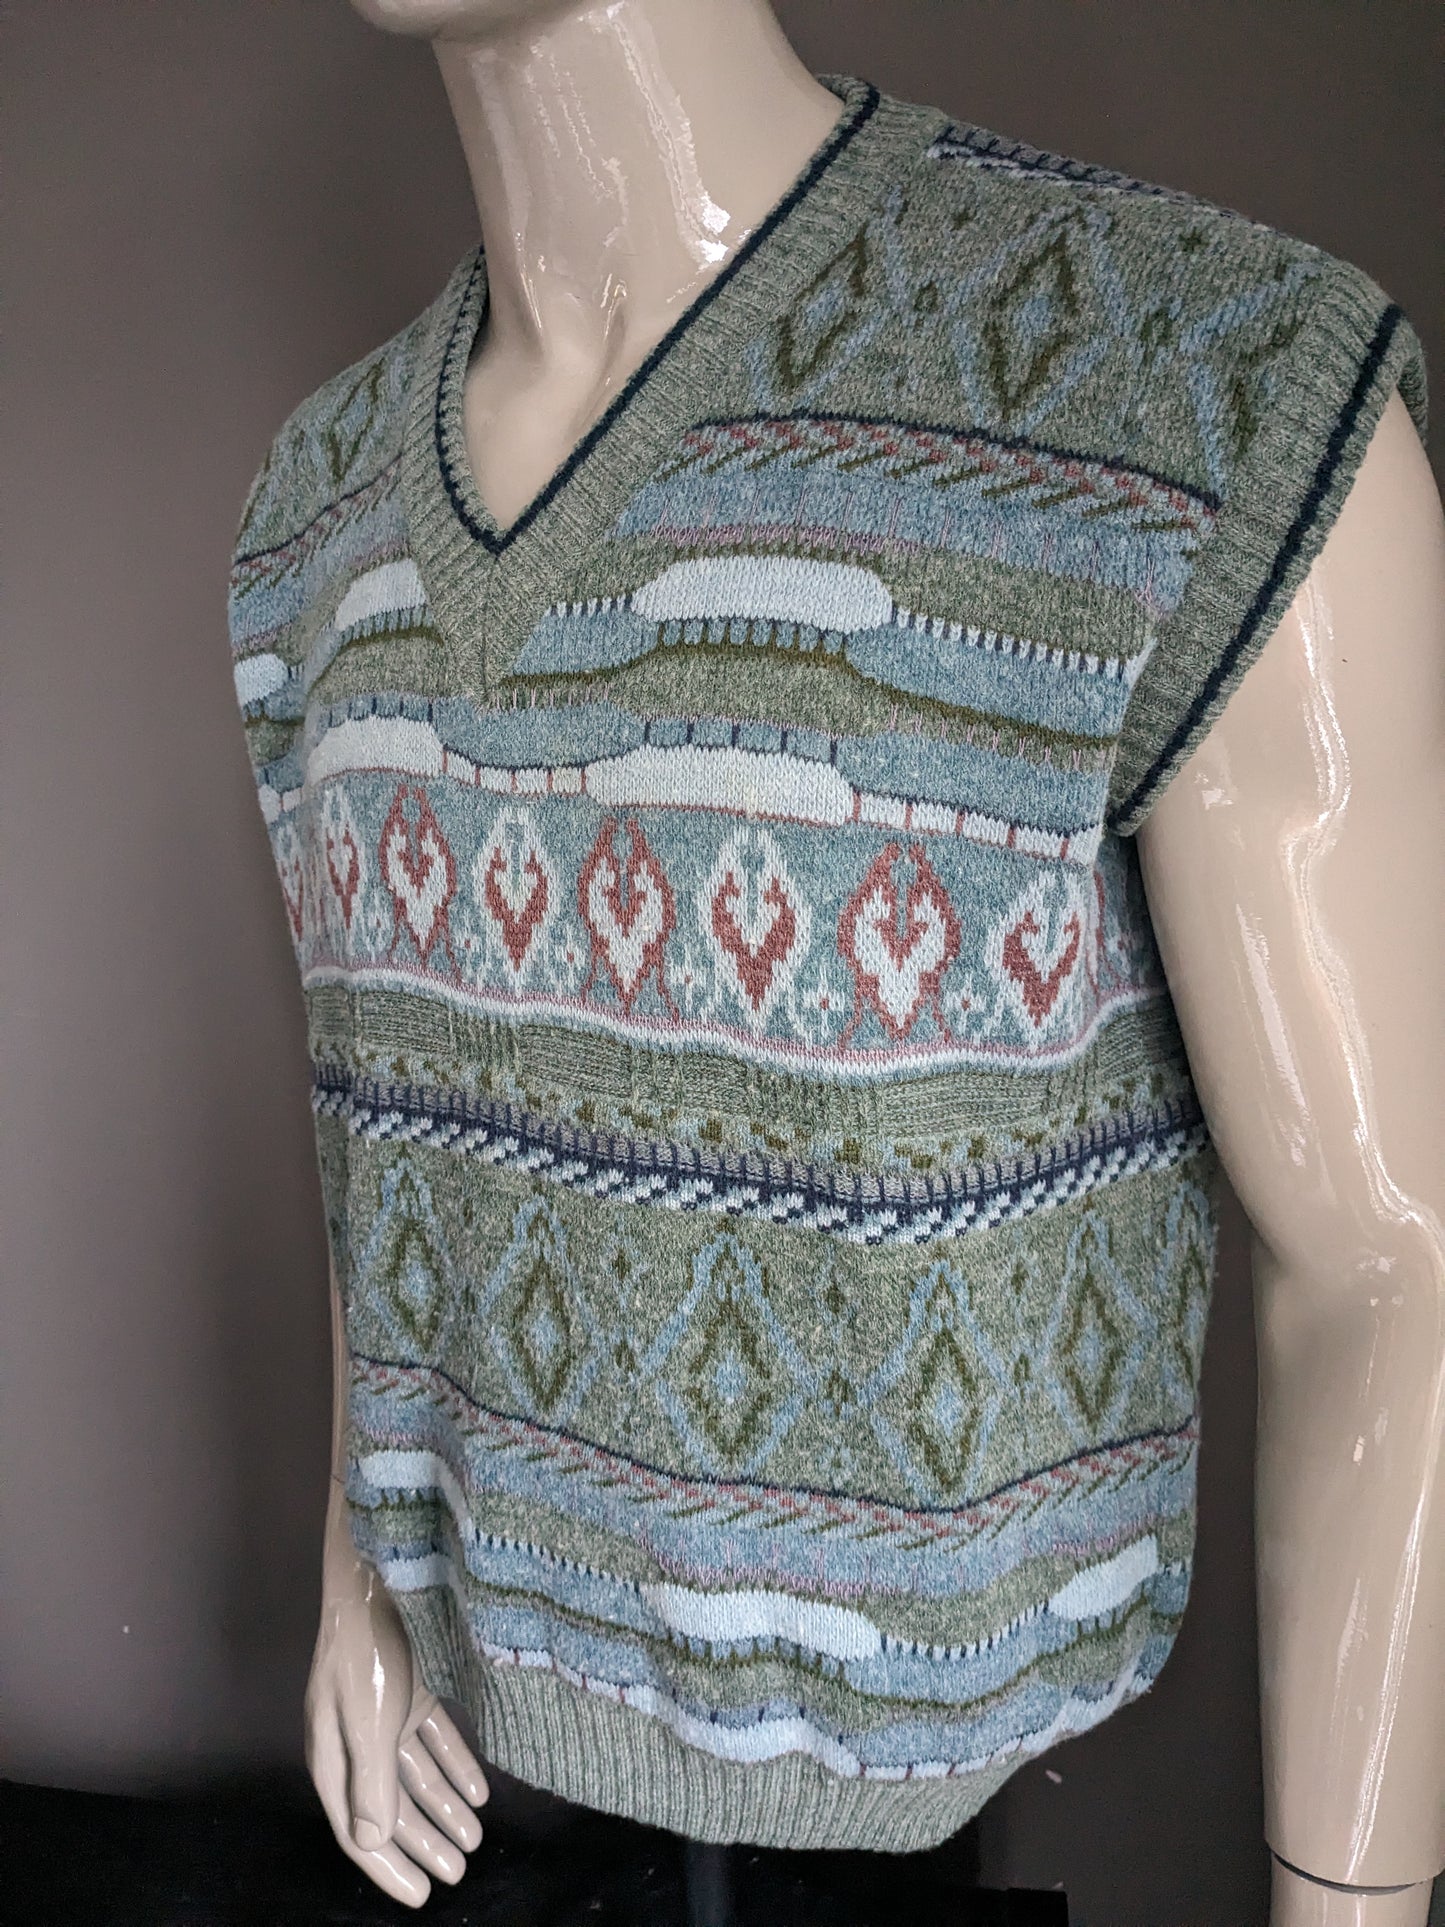 Vintage Yorn Wool Spencer. Azul verde púrpura de color. Tamaño xl. 60% de lana.